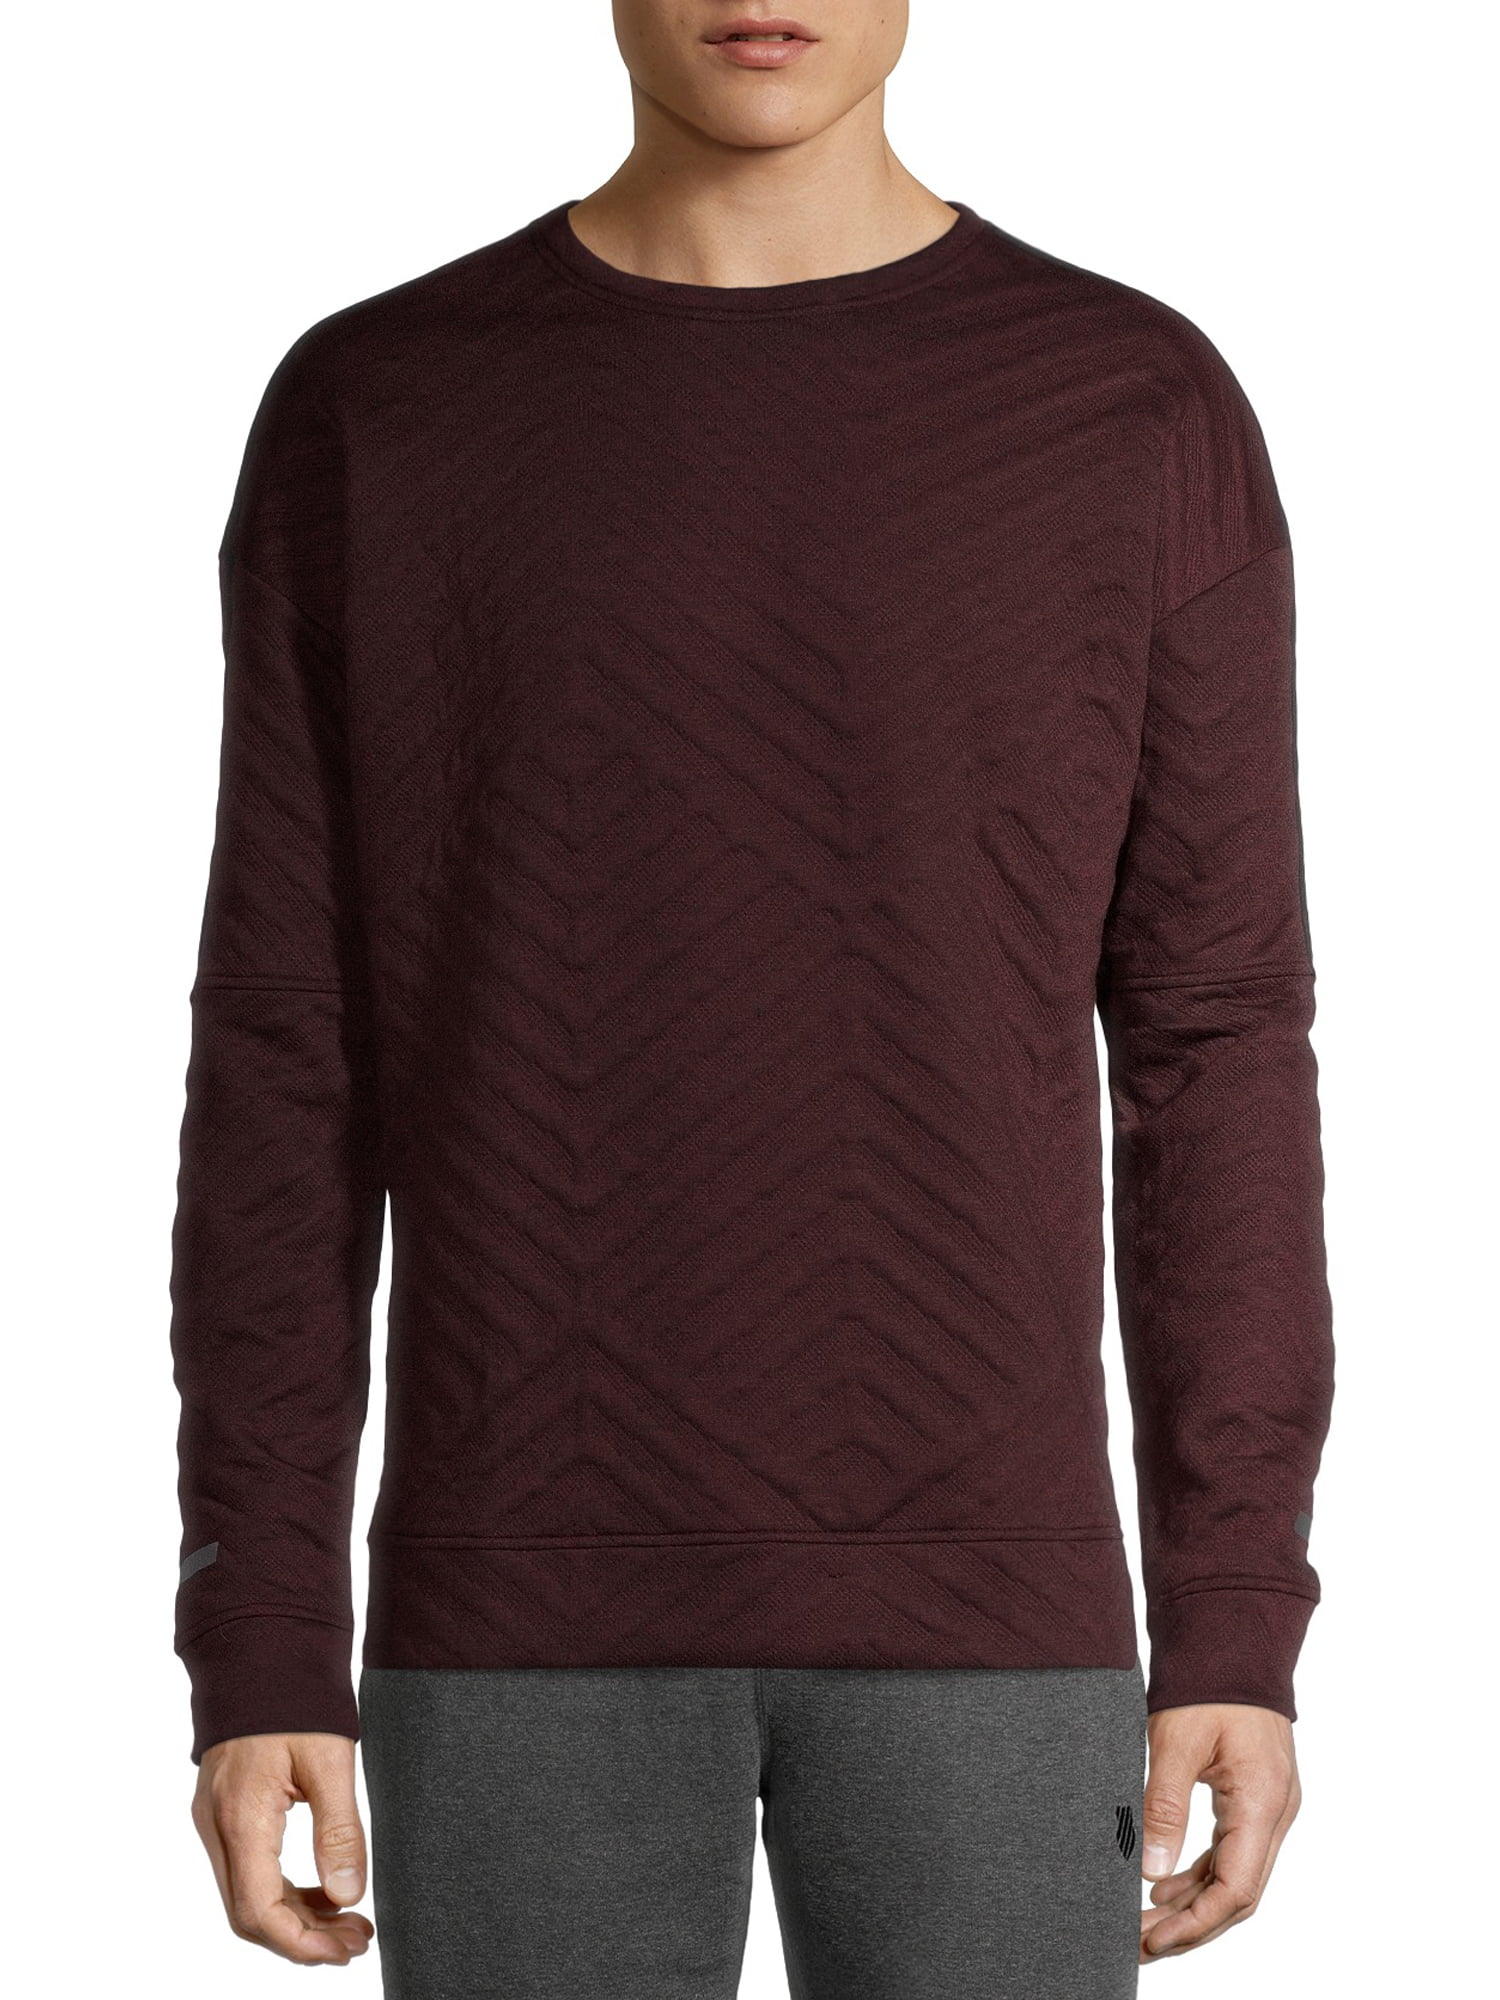 Apana Men's Jacquard Sweatshirt with Drop Shoulders - Walmart.com